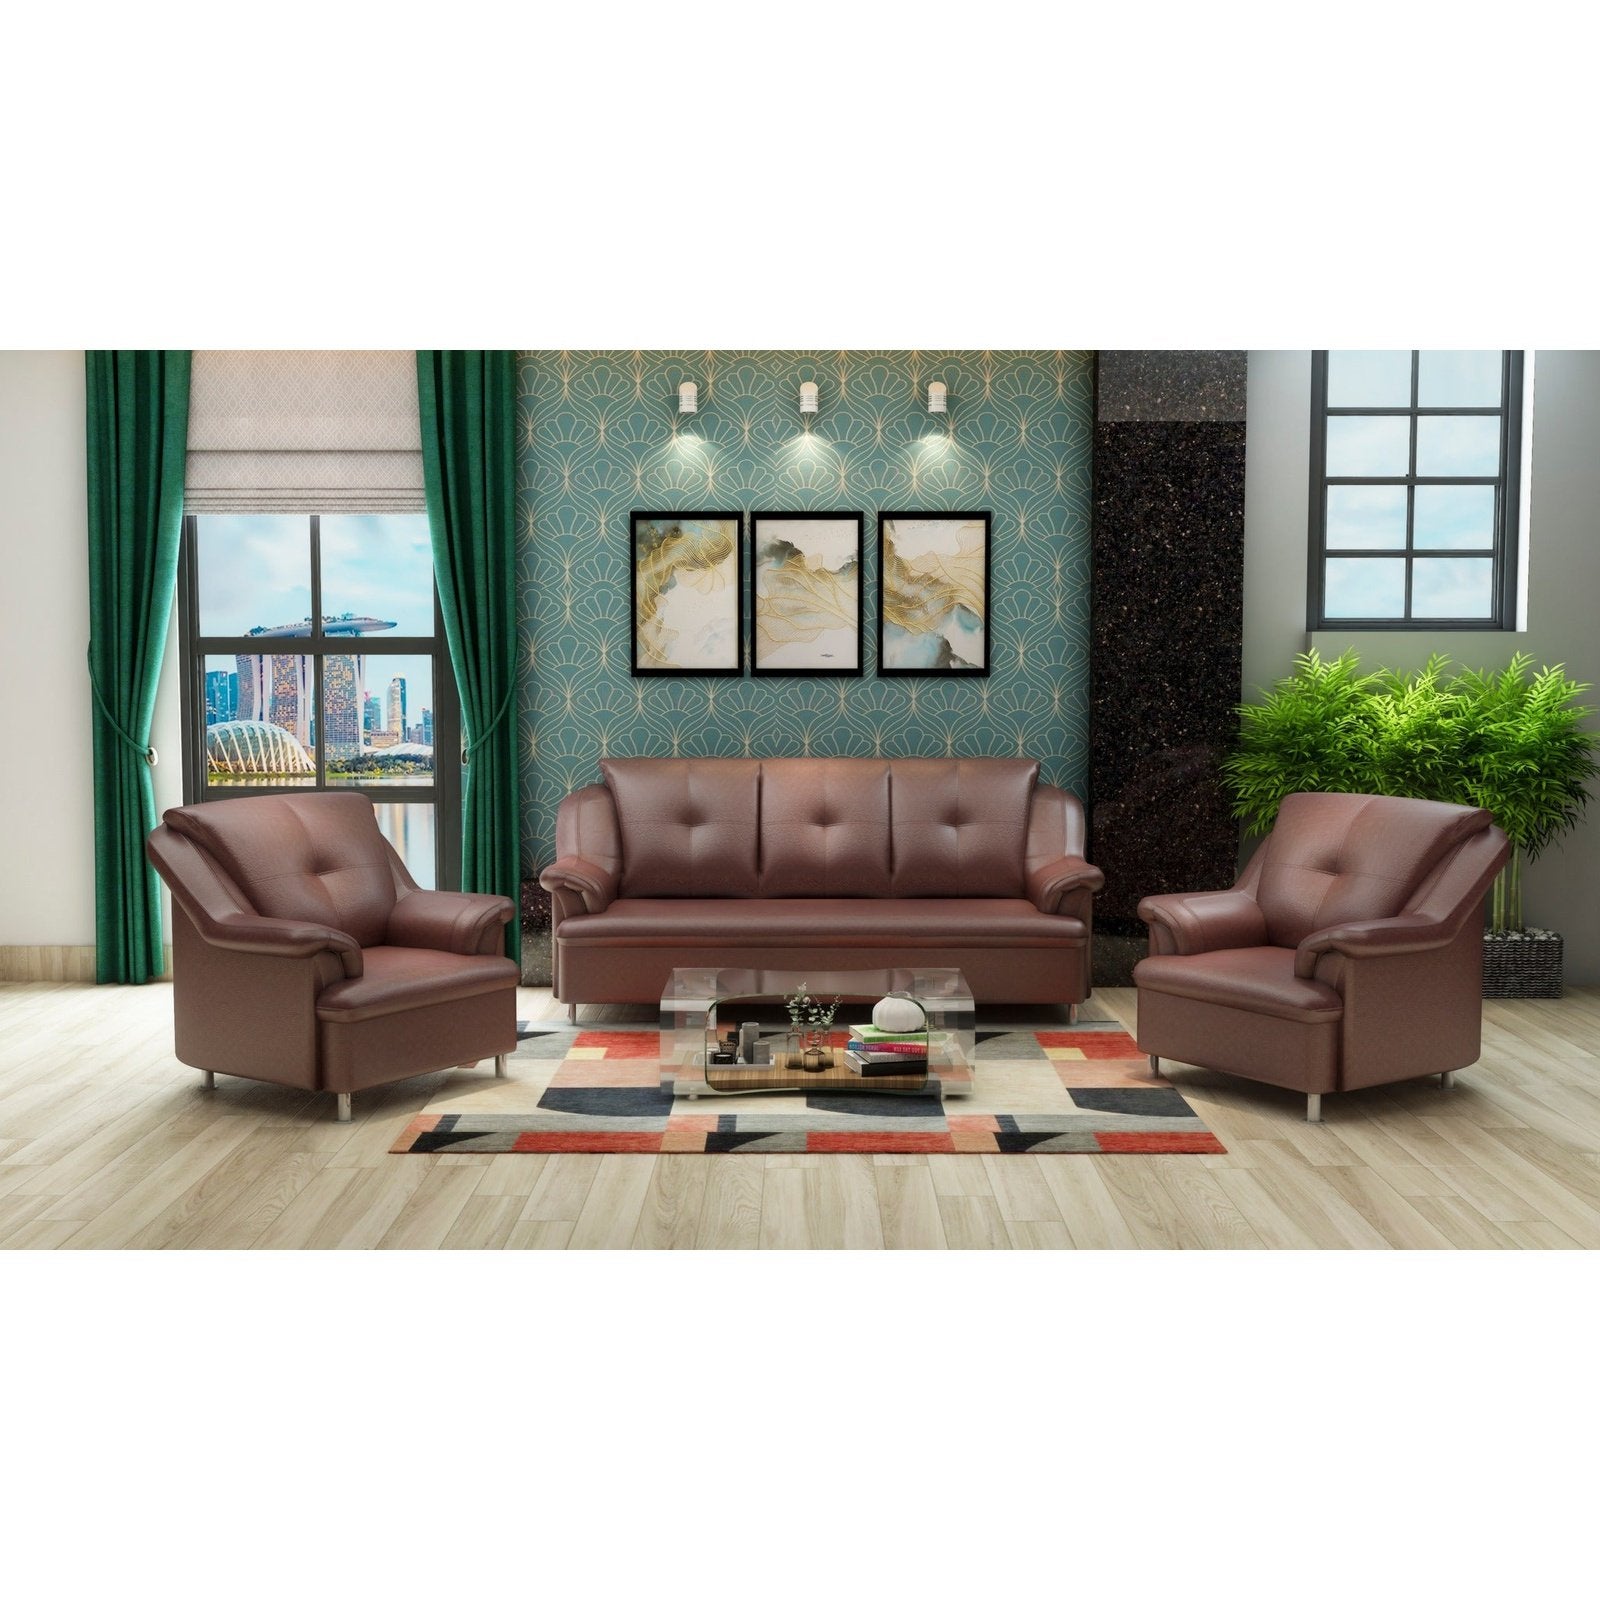 MS-500 SYDNEY SOFA SET 3+1+1 Mobel Furniture